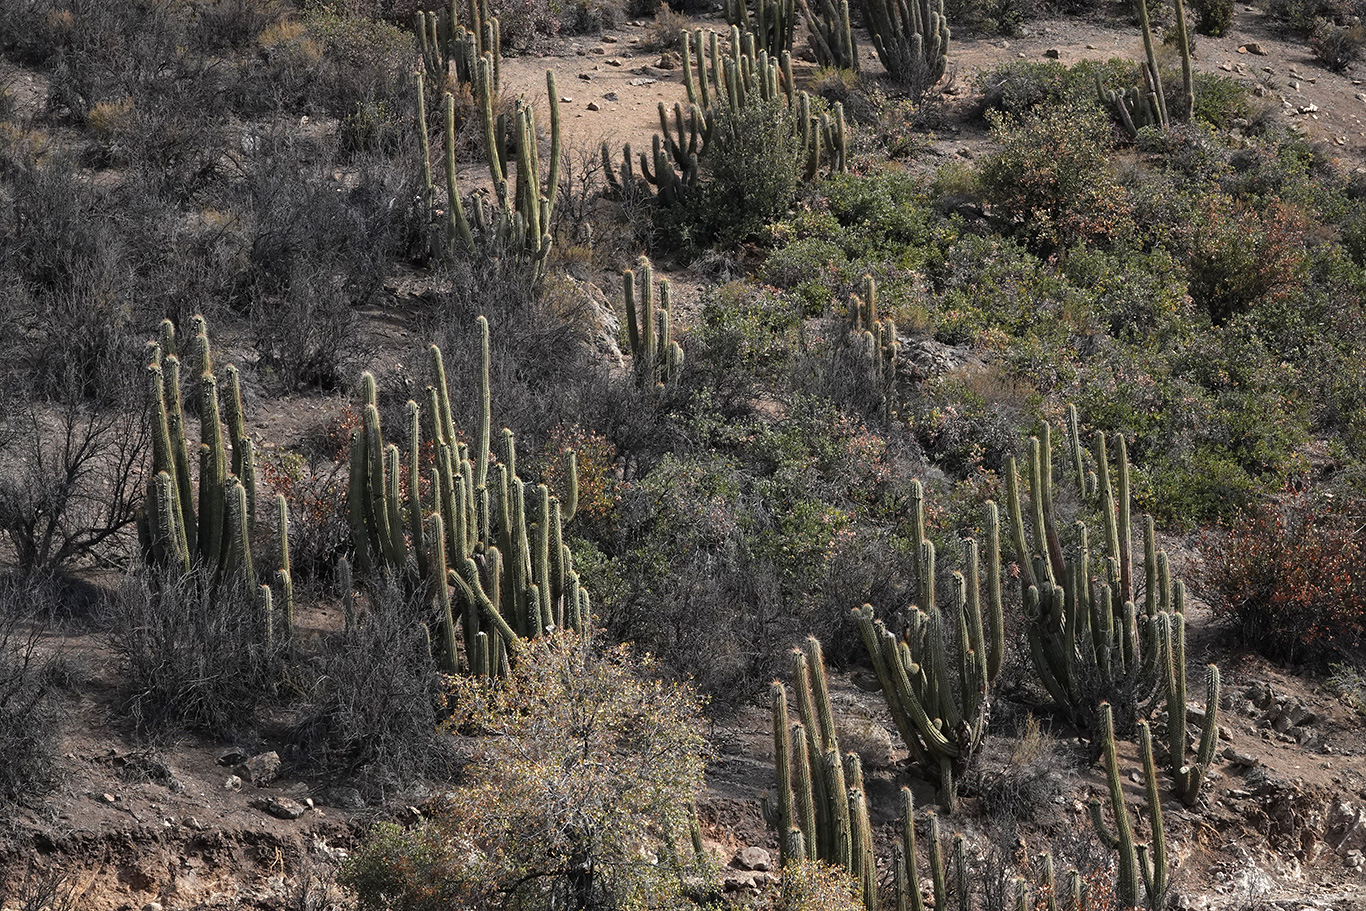  Cactus habitat, Camino a Valle Nevado, Chile.